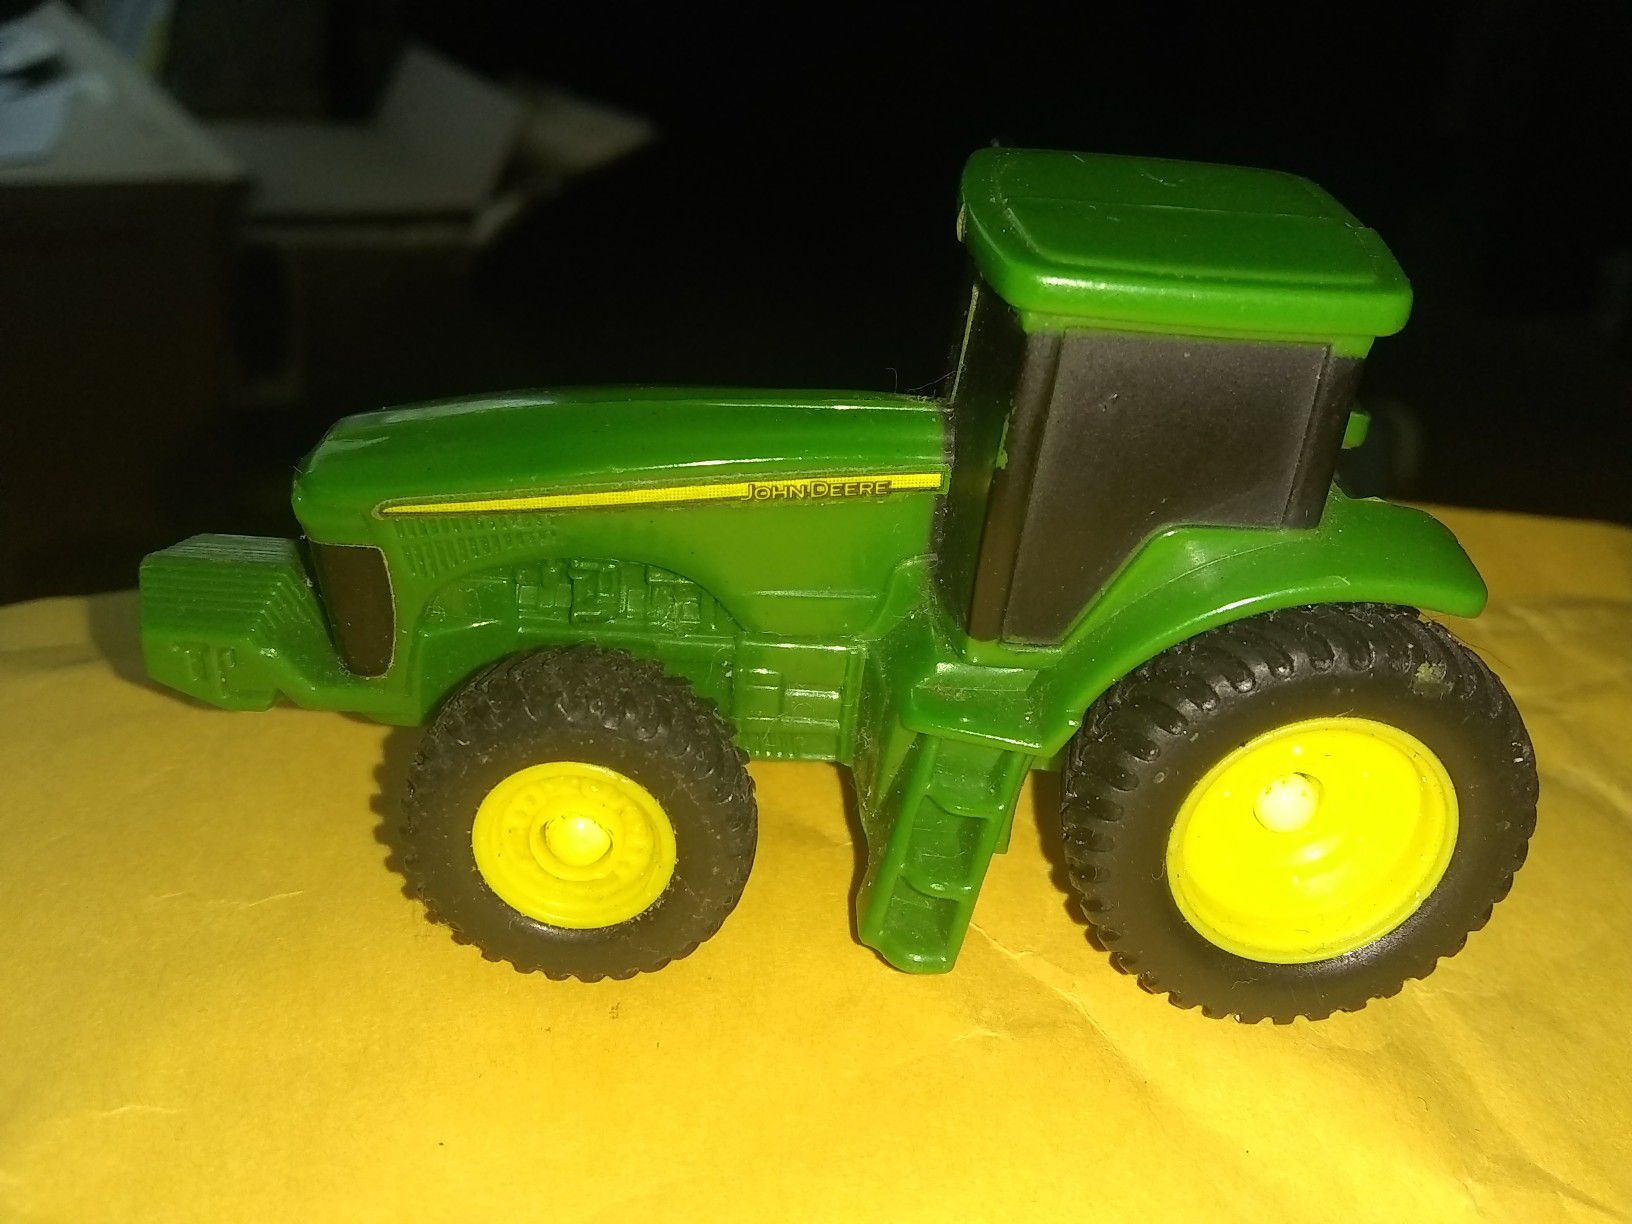 Little mini version of John Deere tractor